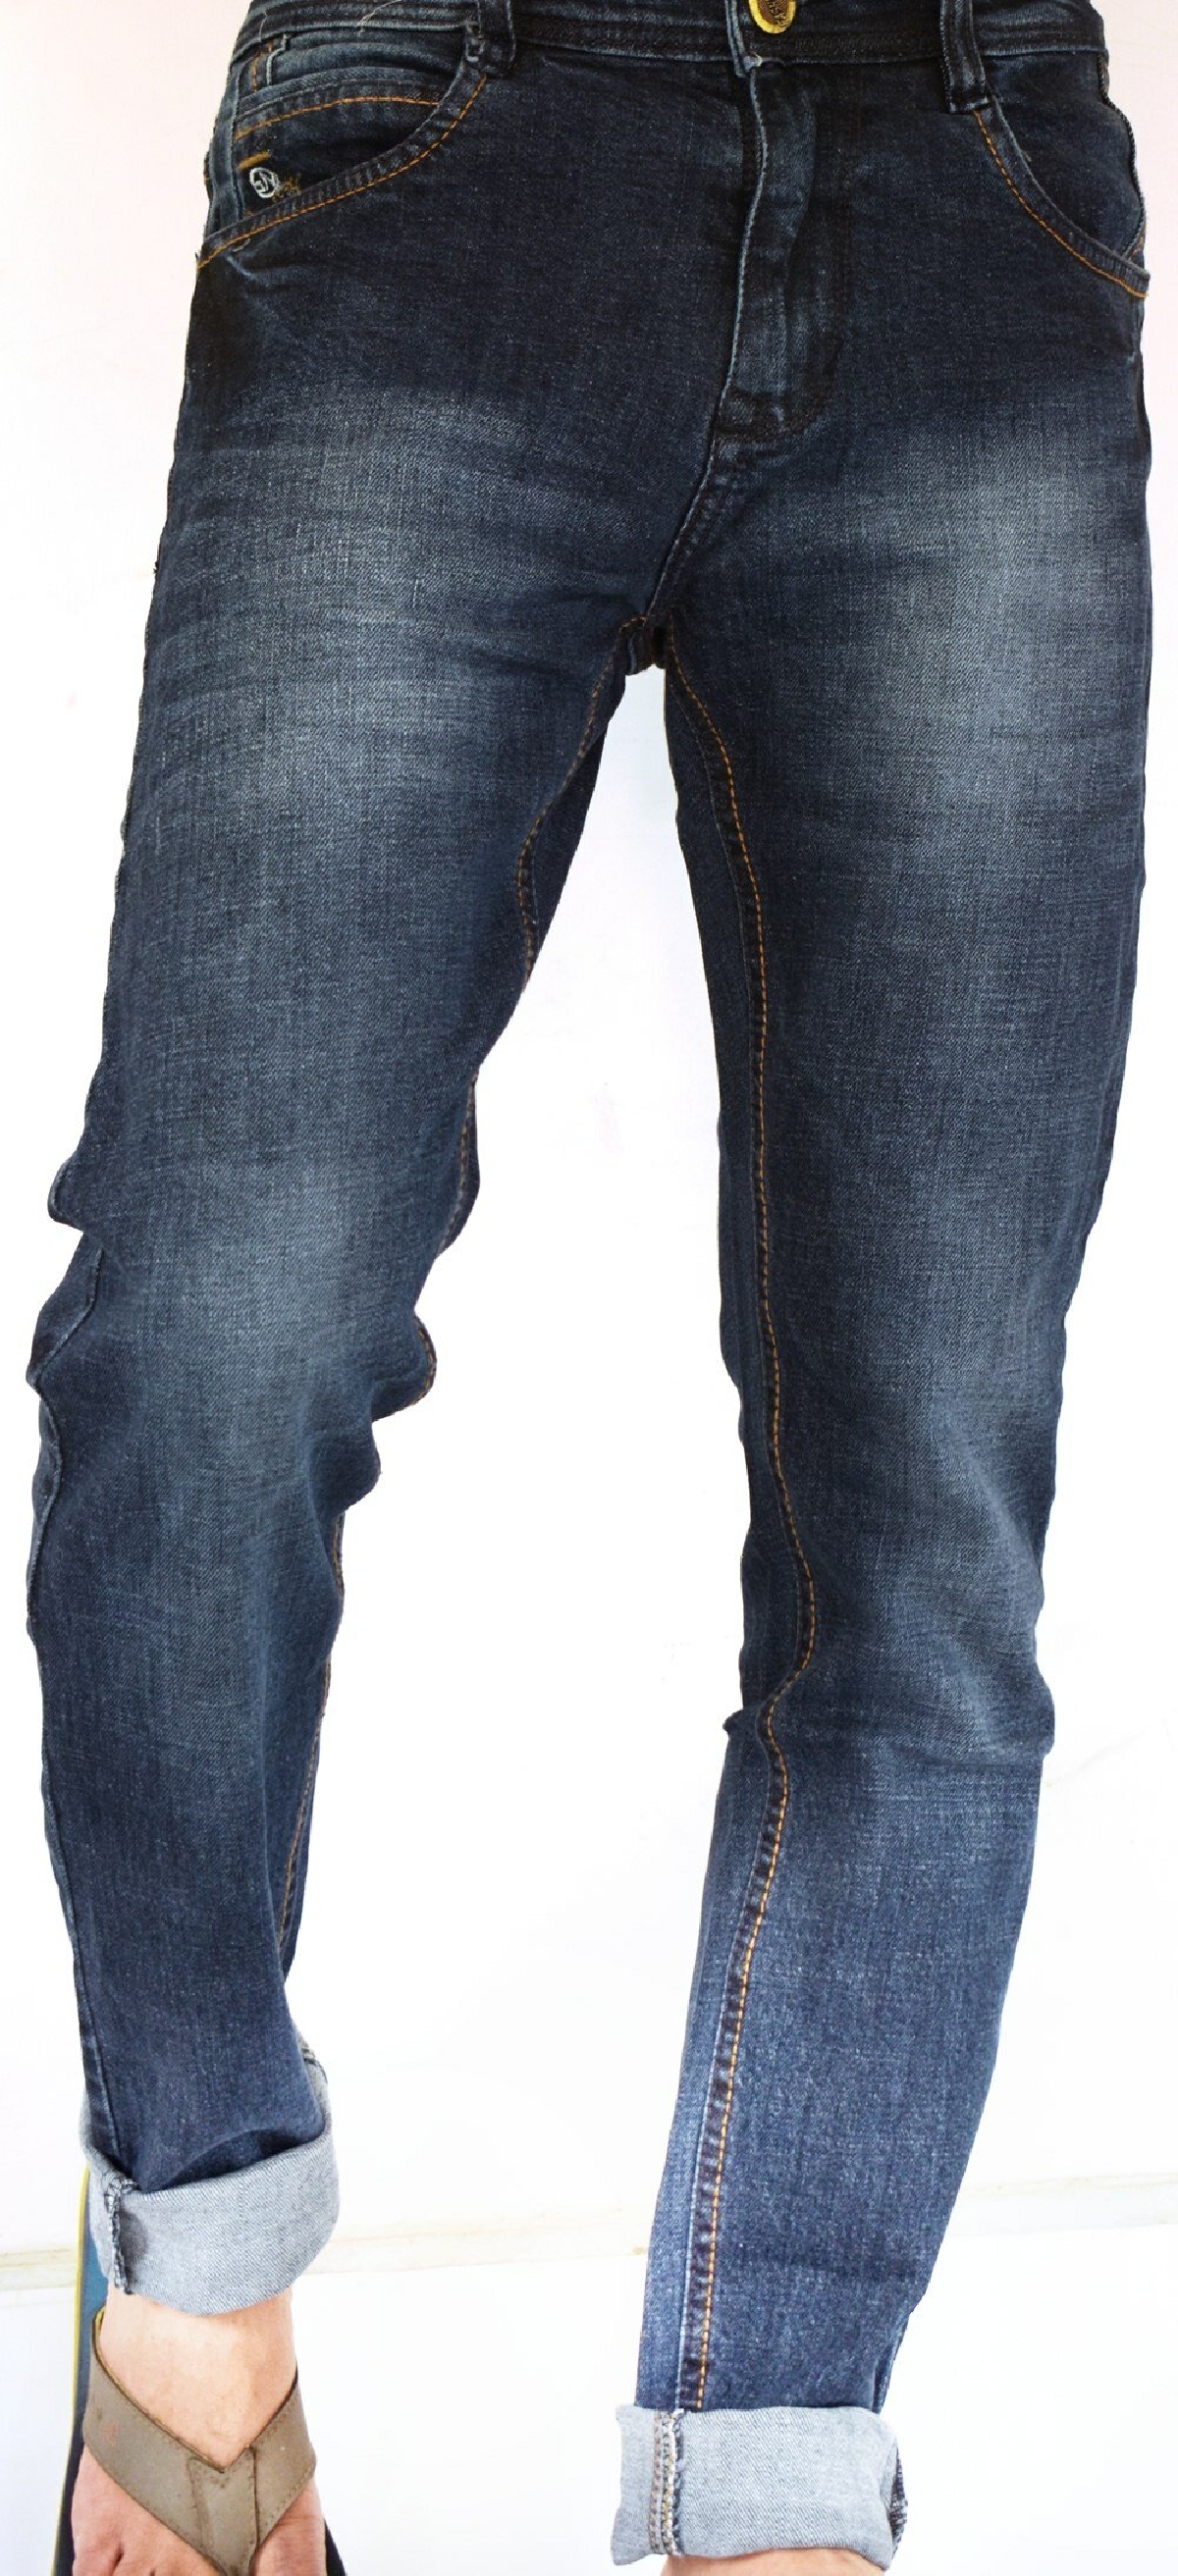 sparky original jeans price